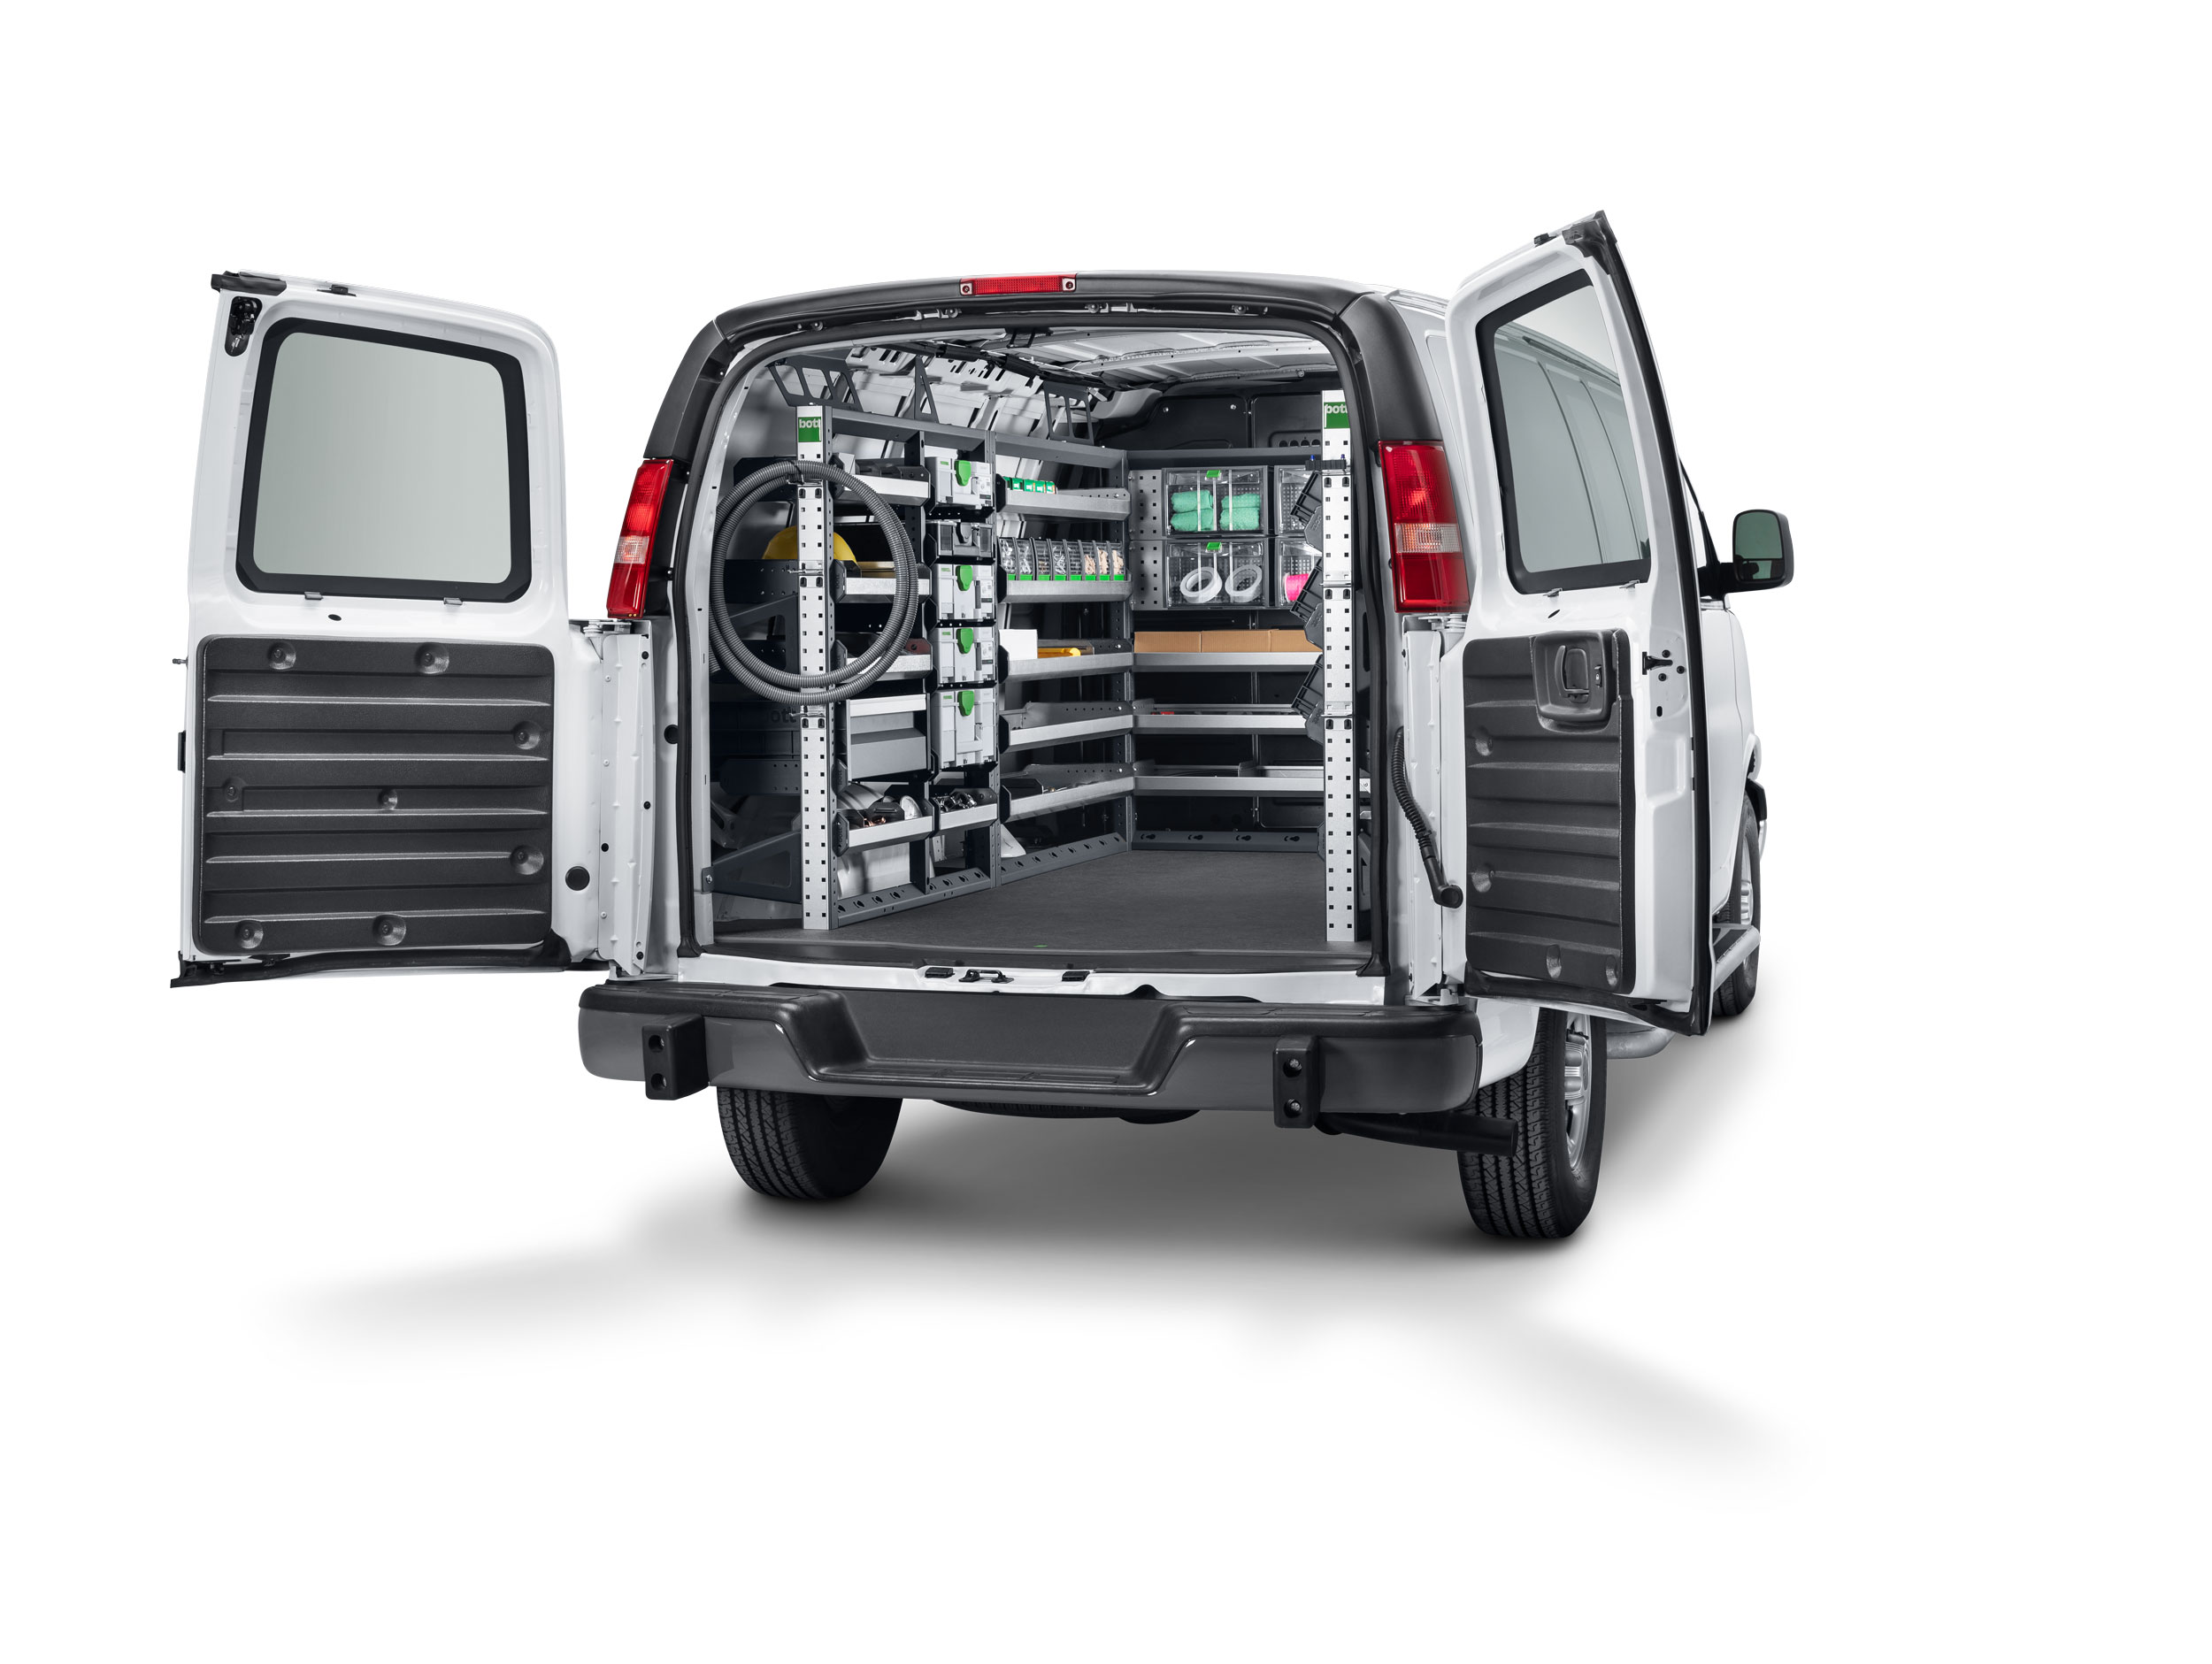 bott Smartvan – Modular Van Shelving & Storage Systems